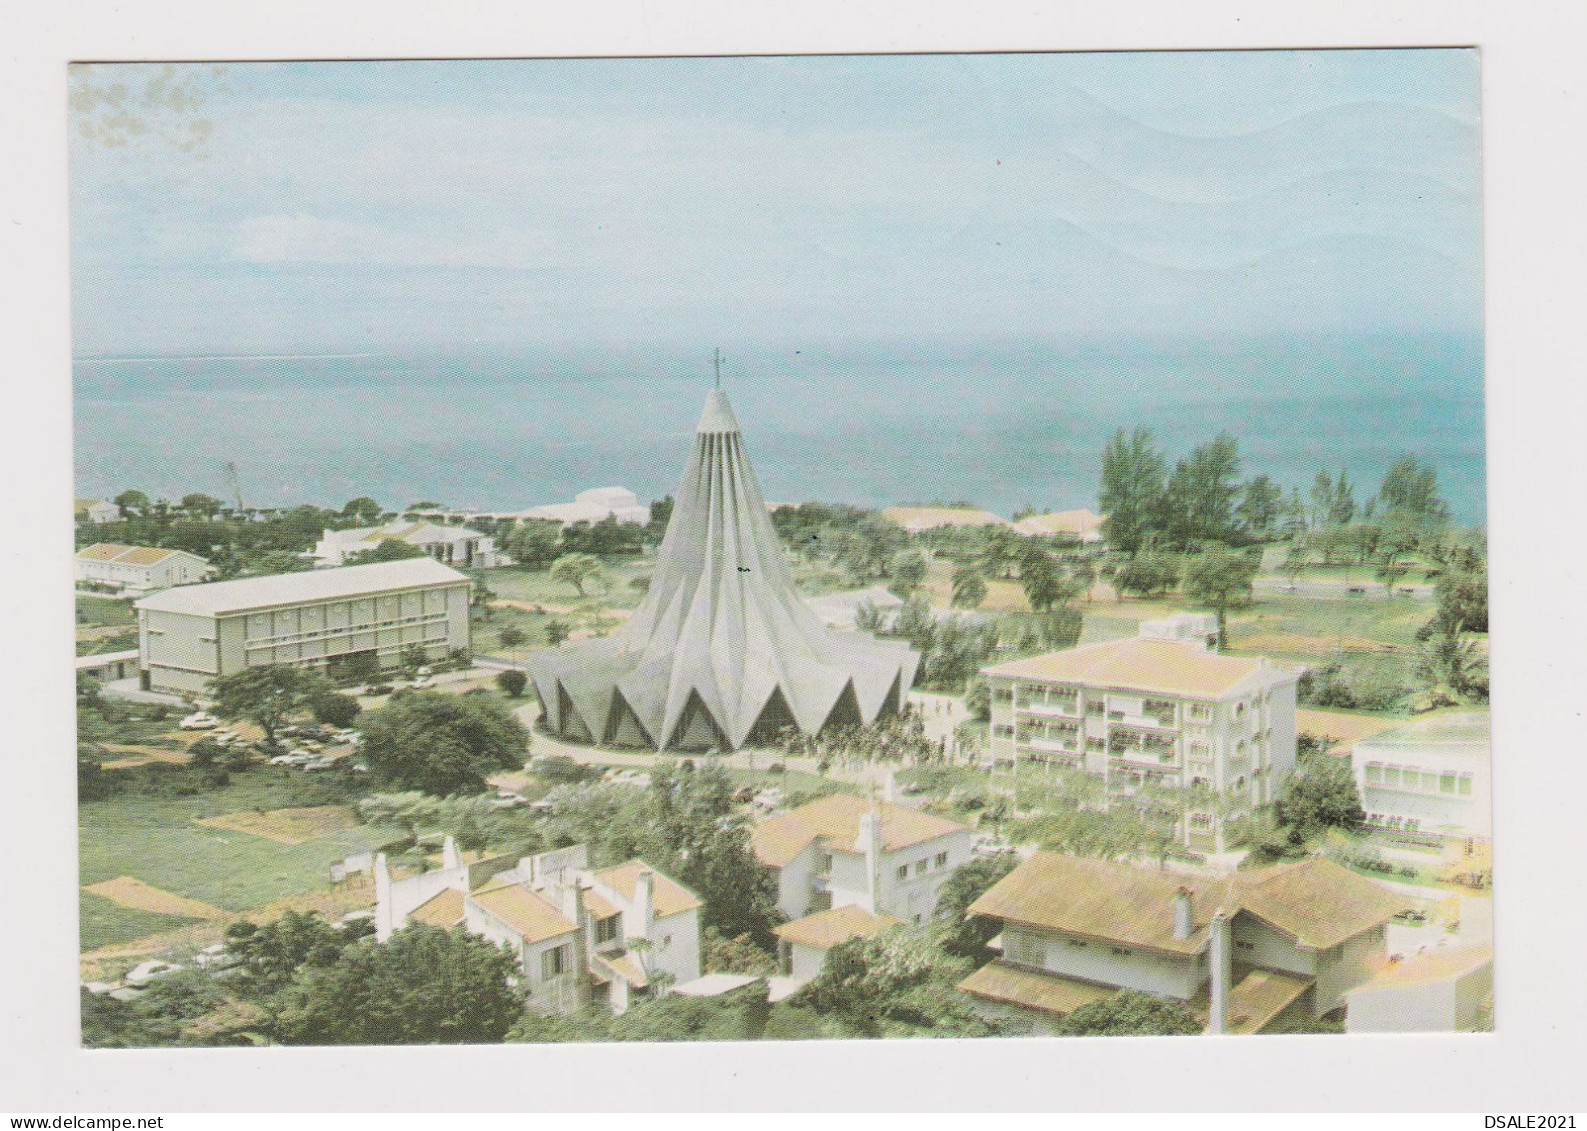 Mozambique Maputo Church Of Saint Anthony Polana Aerial View, Vintage Photo Postcard RPPc (42411) - Mozambique